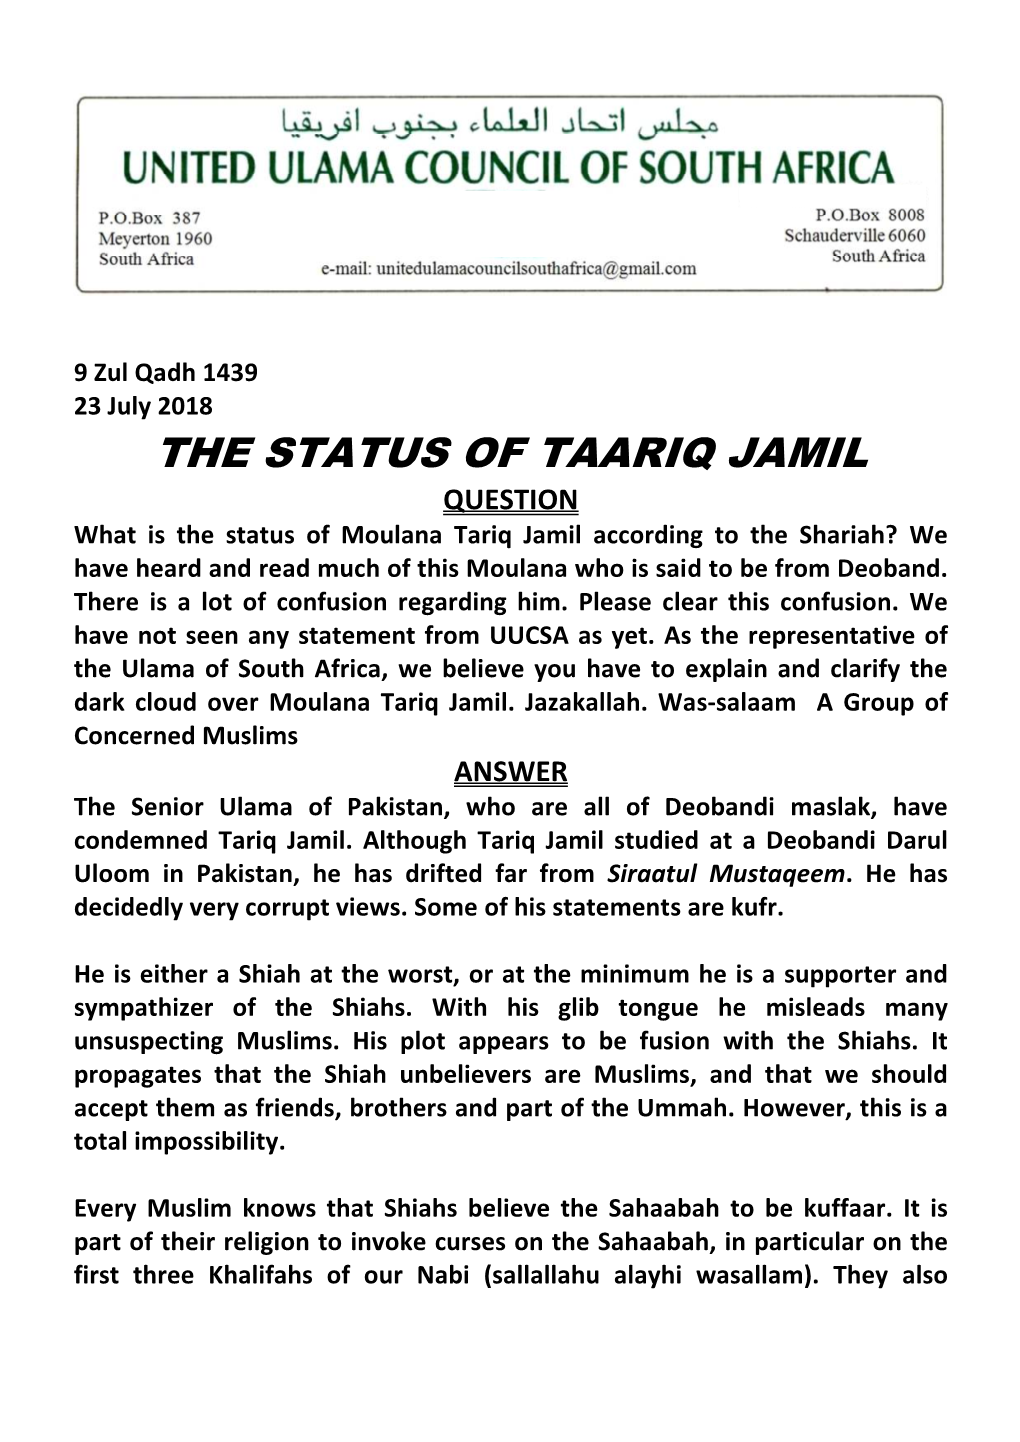 The Status of Taariq Jamil